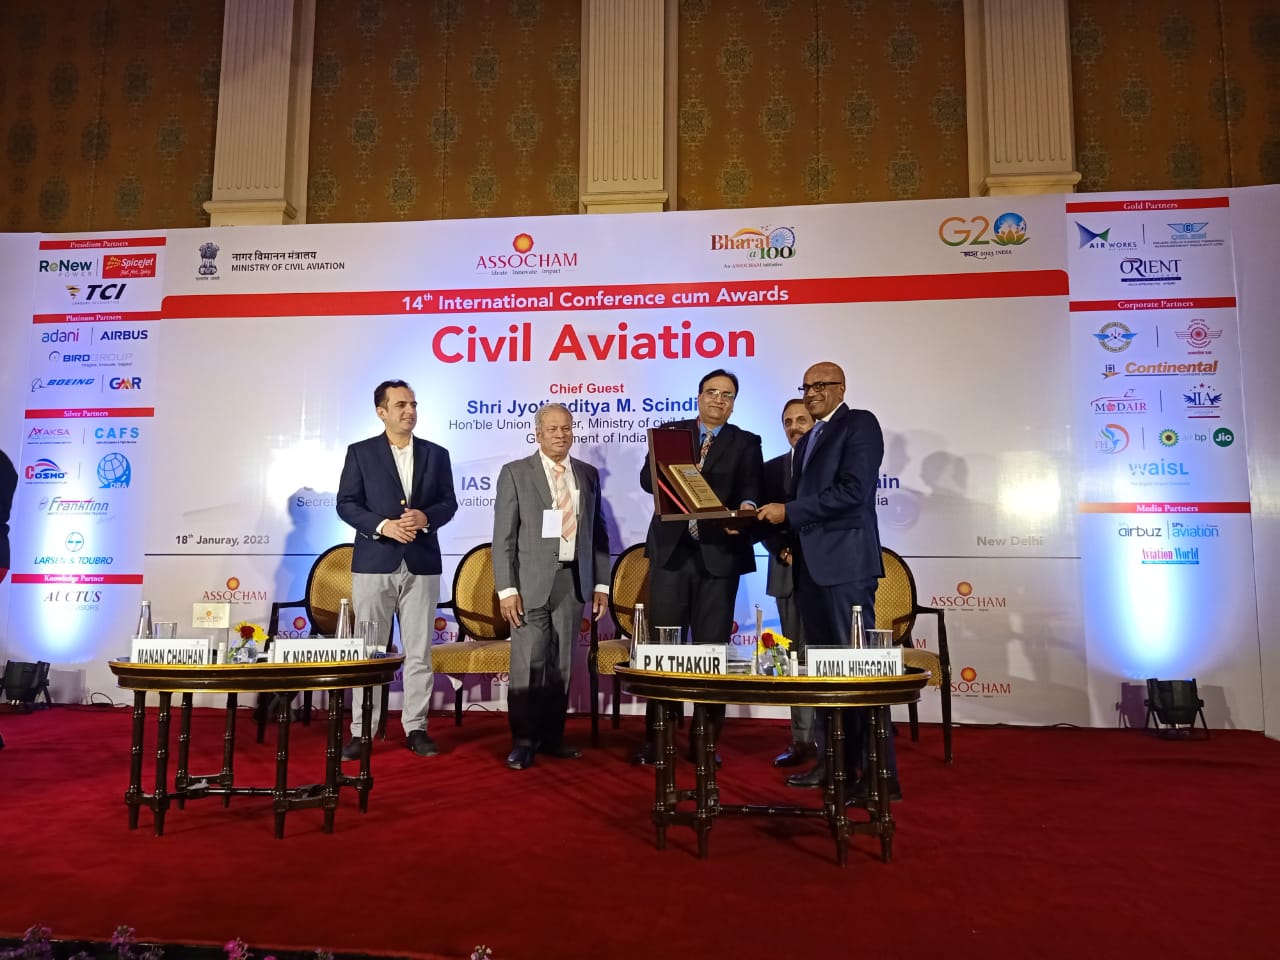 Mumbai’s CSMIA awarded the 'Best Sustainable Airport of the Year’ by ASSOCHAM